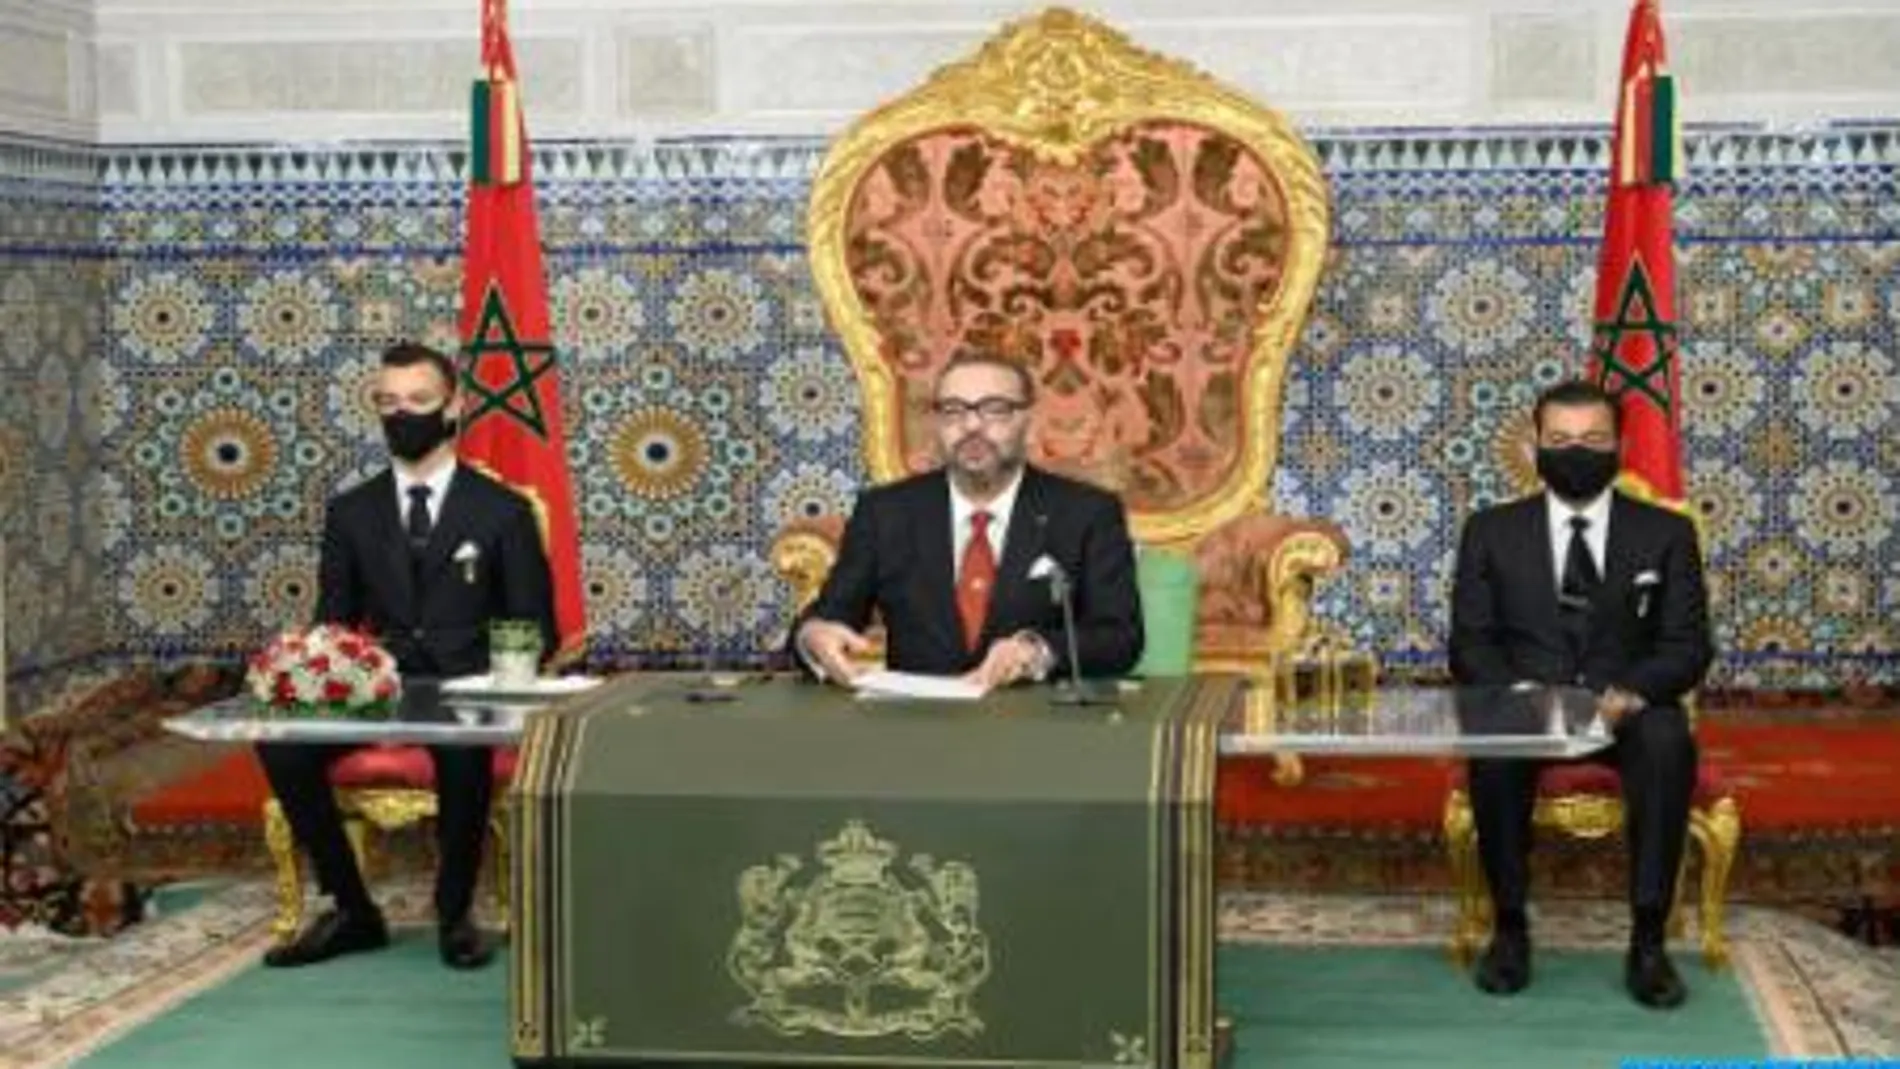 Mohamed VI en un momento de su discurso